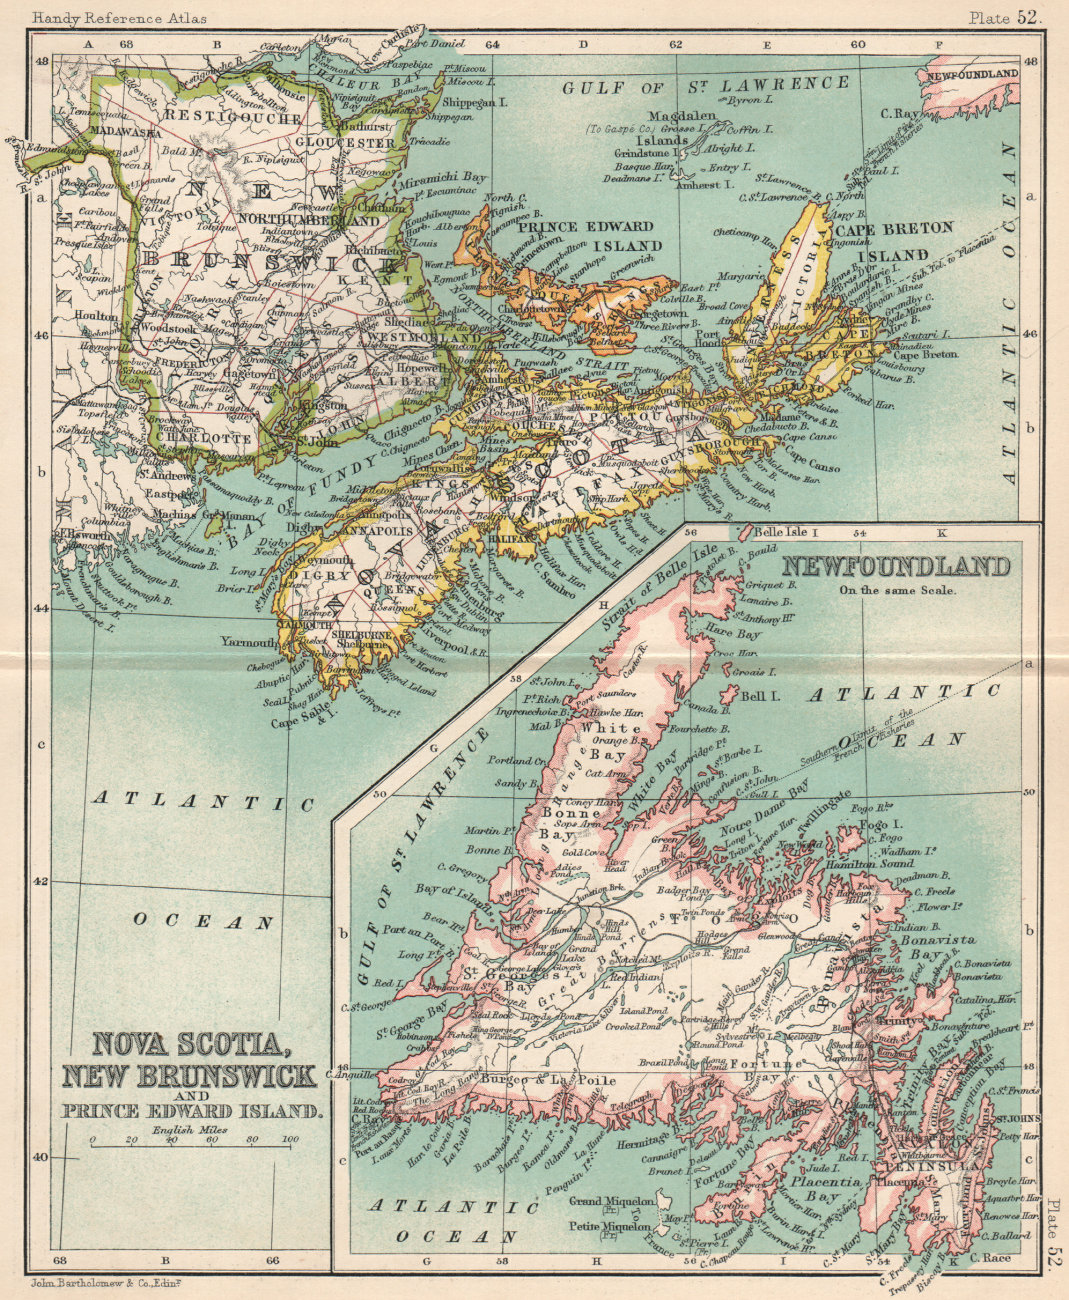 Associate Product Nova Scotia New Brunswick Prince Edward Island Newfoundland. Canada 1904 map